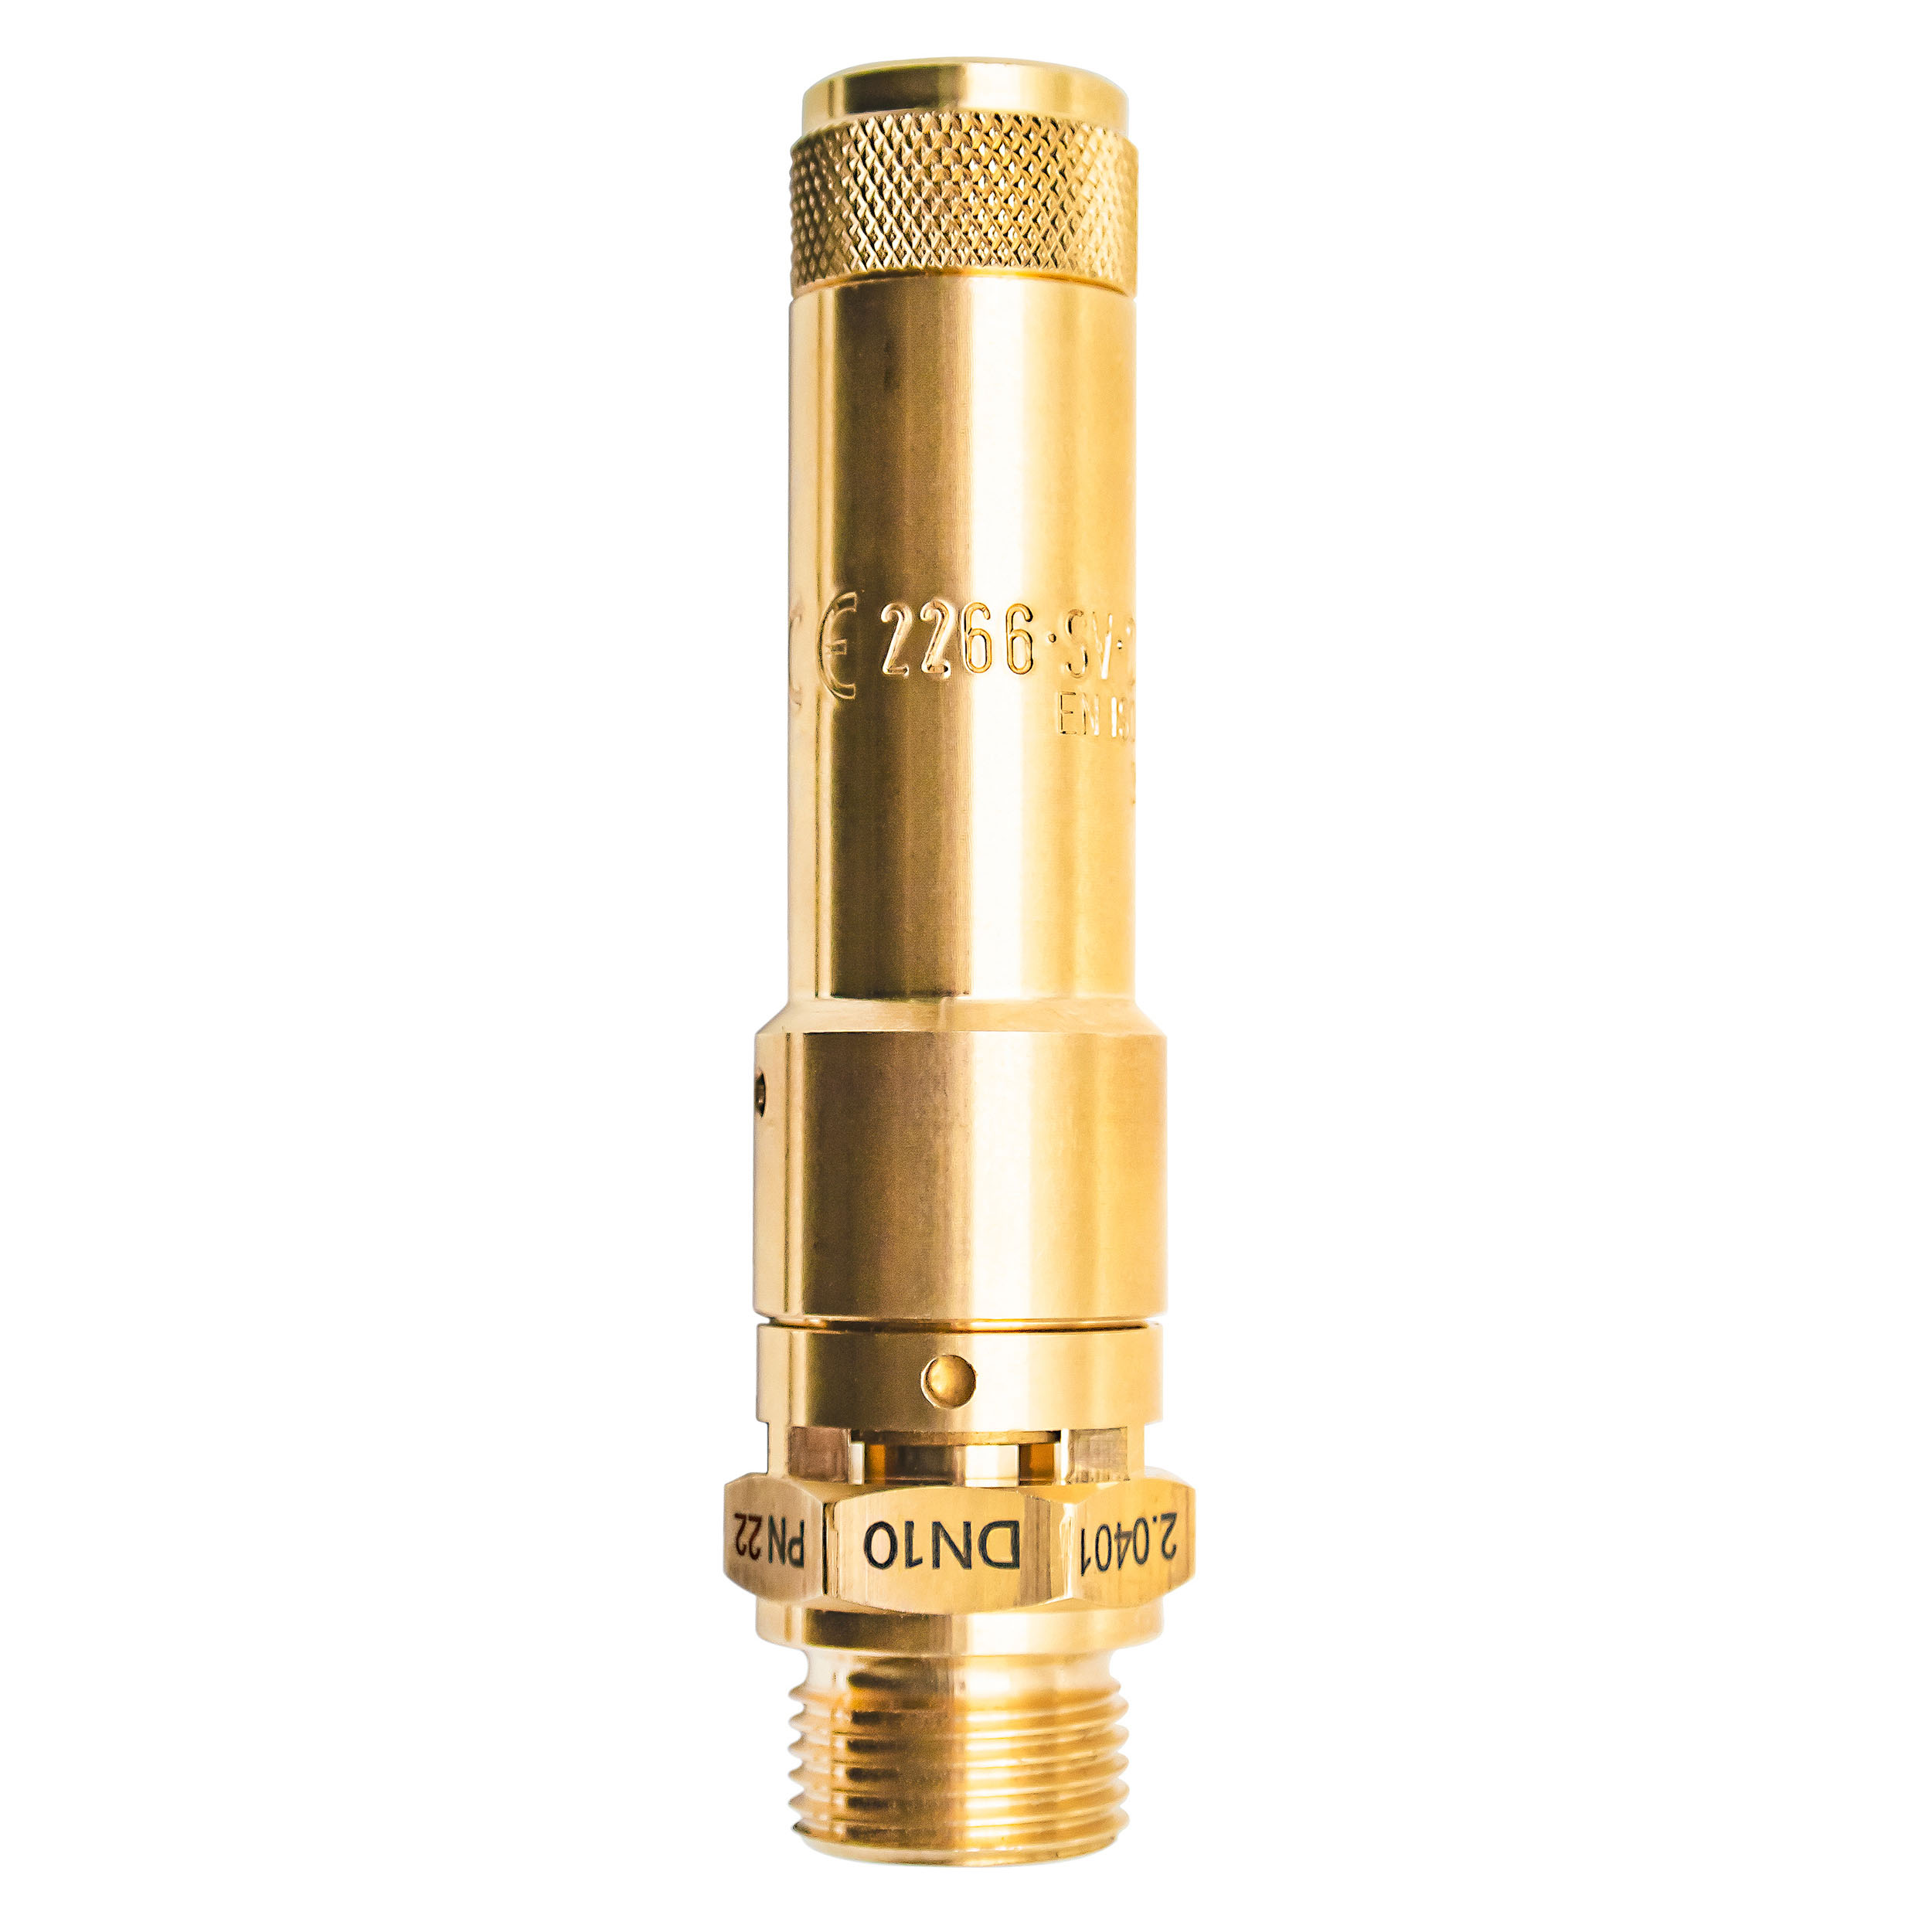 Savety valve component tested DN 10, G½, set pressure: 6.7 bar (97,15 psi)